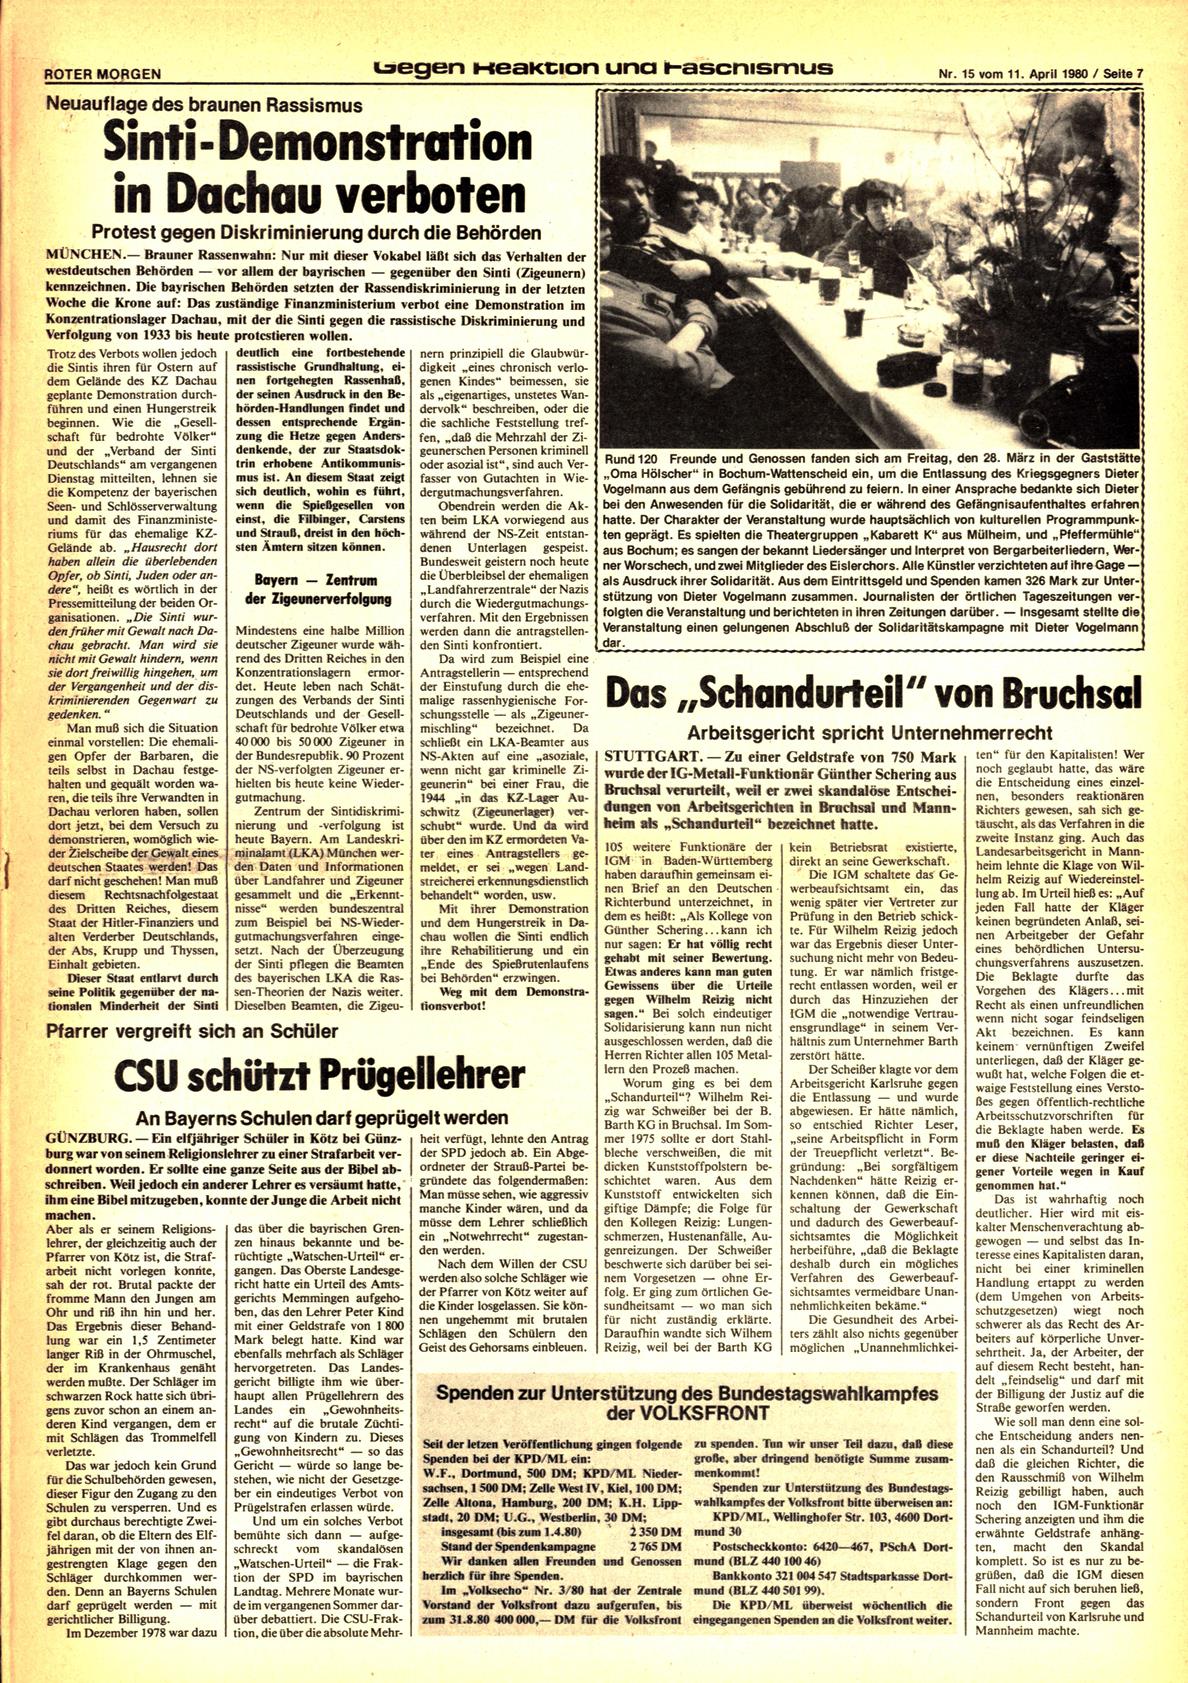 Roter Morgen, 14. Jg., 11. April 1980, Nr. 15, Seite 7